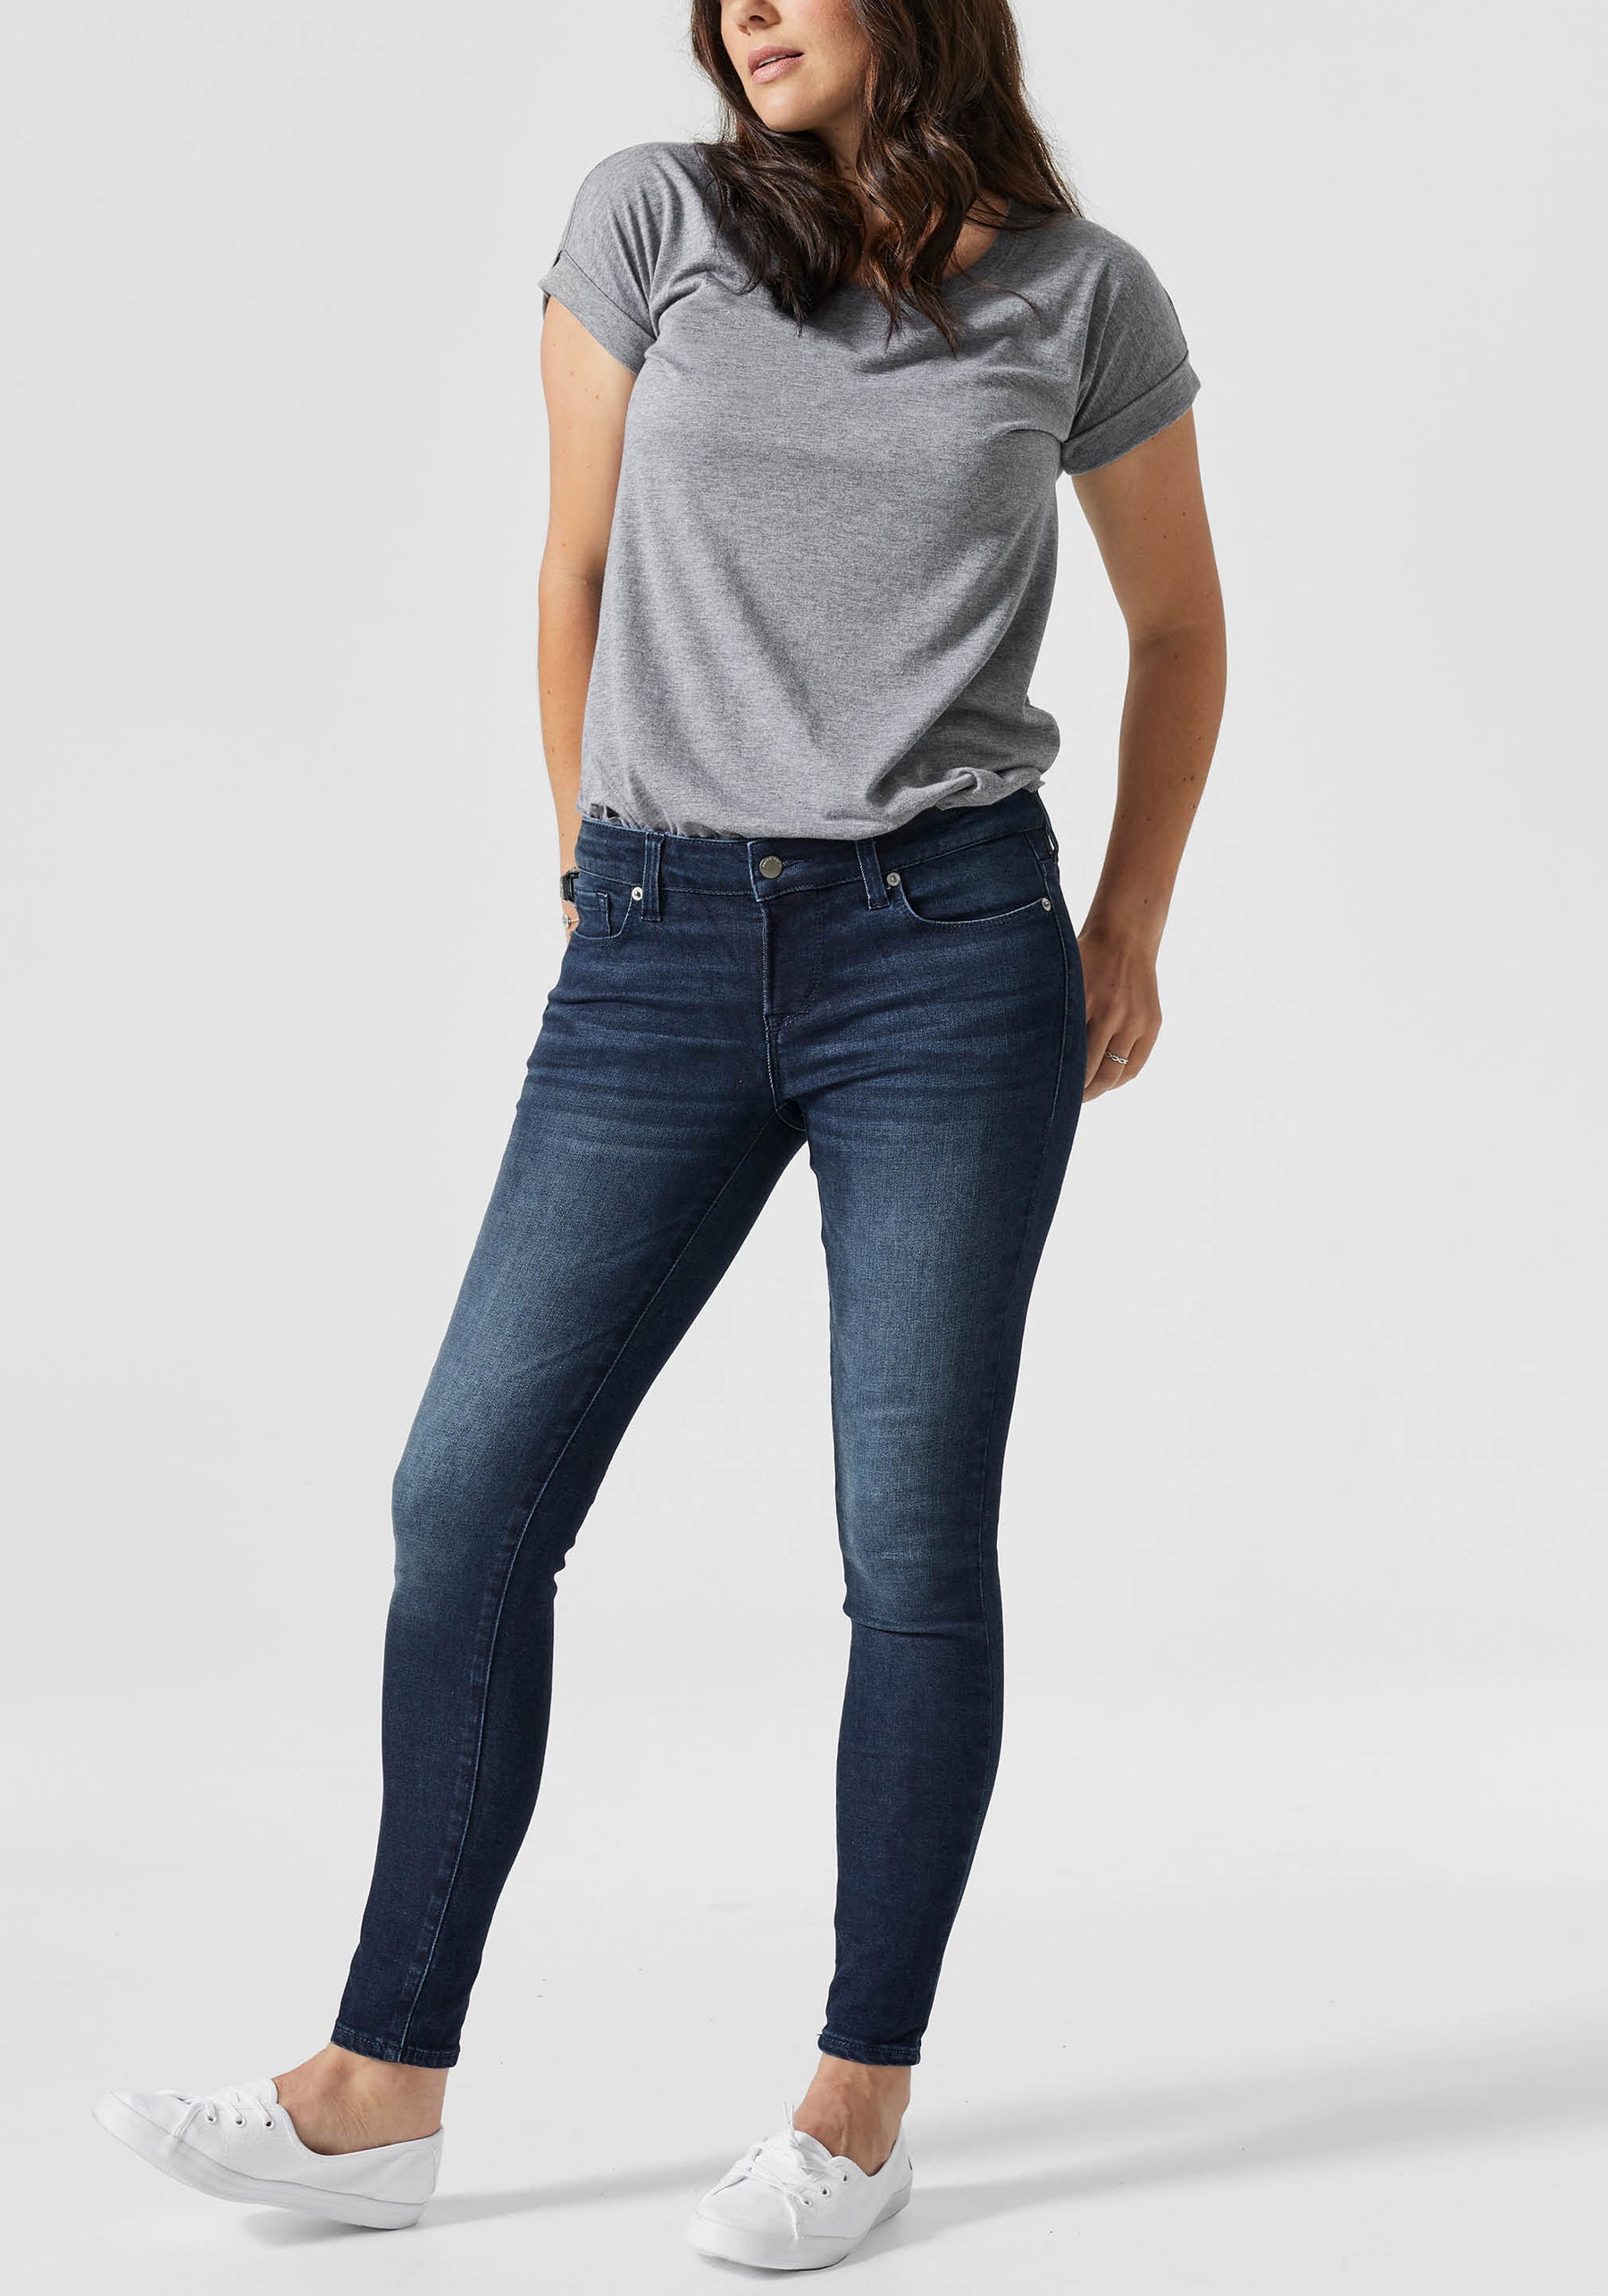 Blanqi Postpartum Jeans